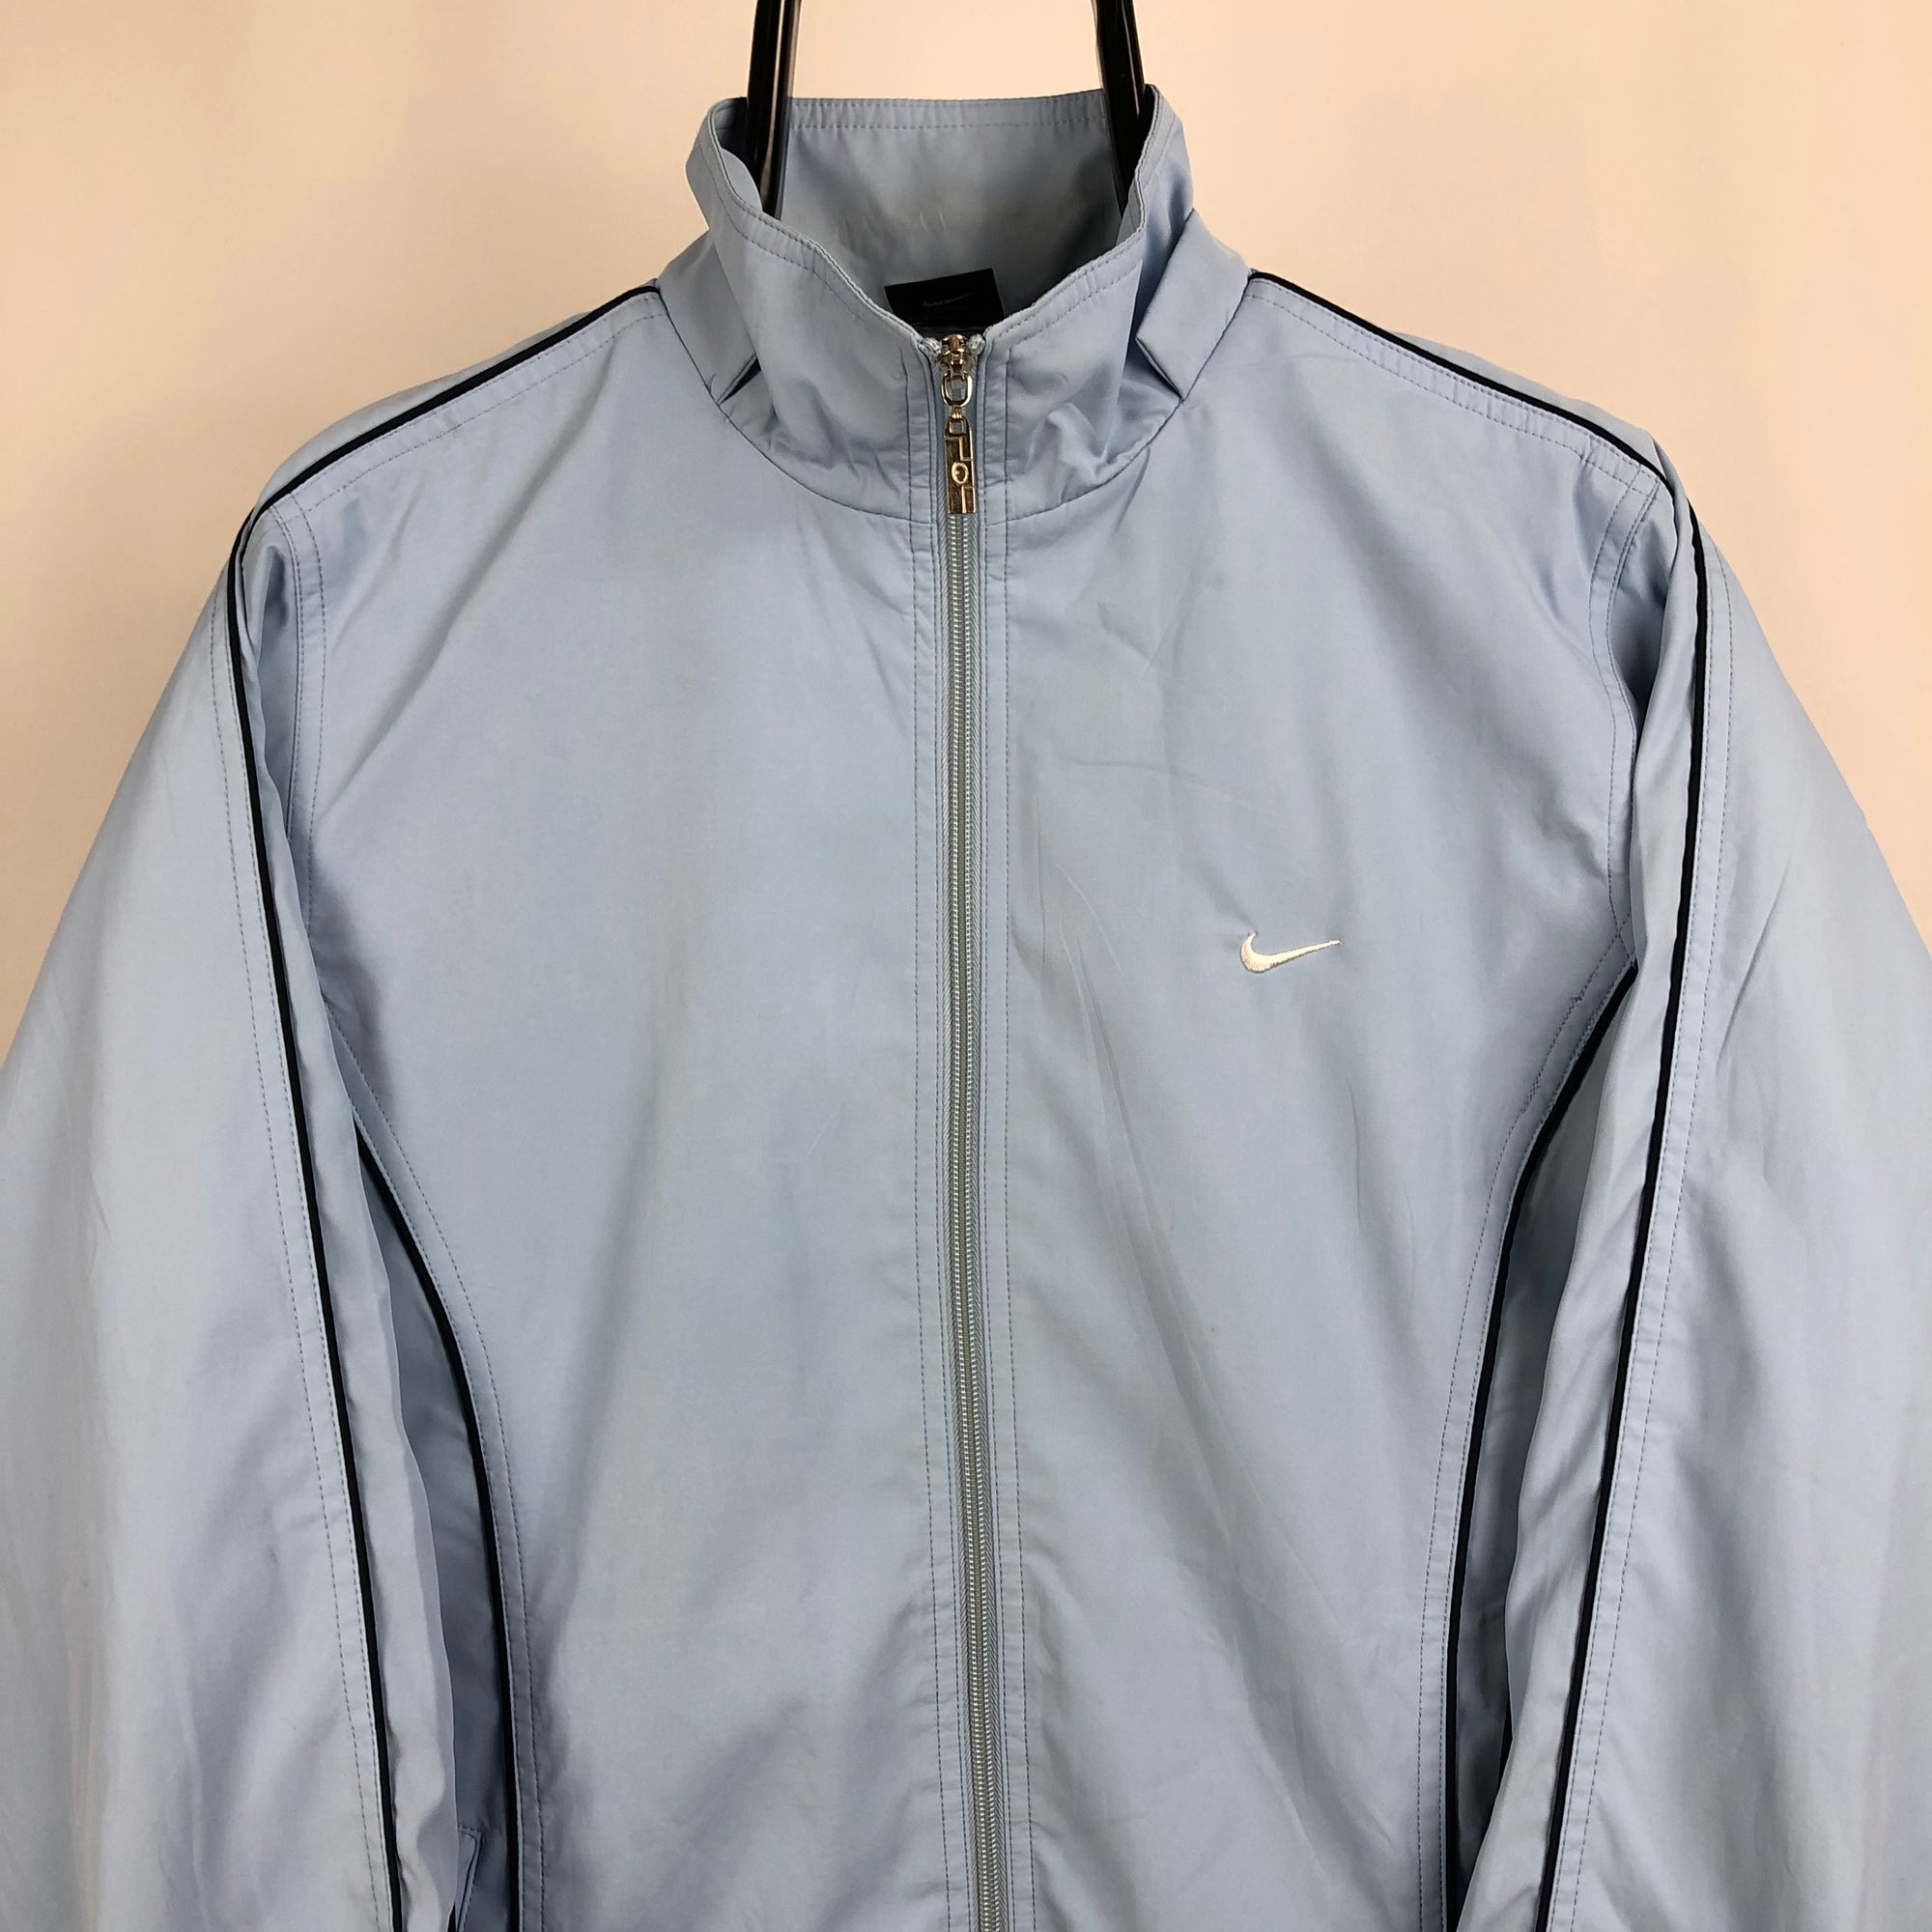 Vintage Nike Track Jacket in Baby Blue - Men's Small/Women's Medium